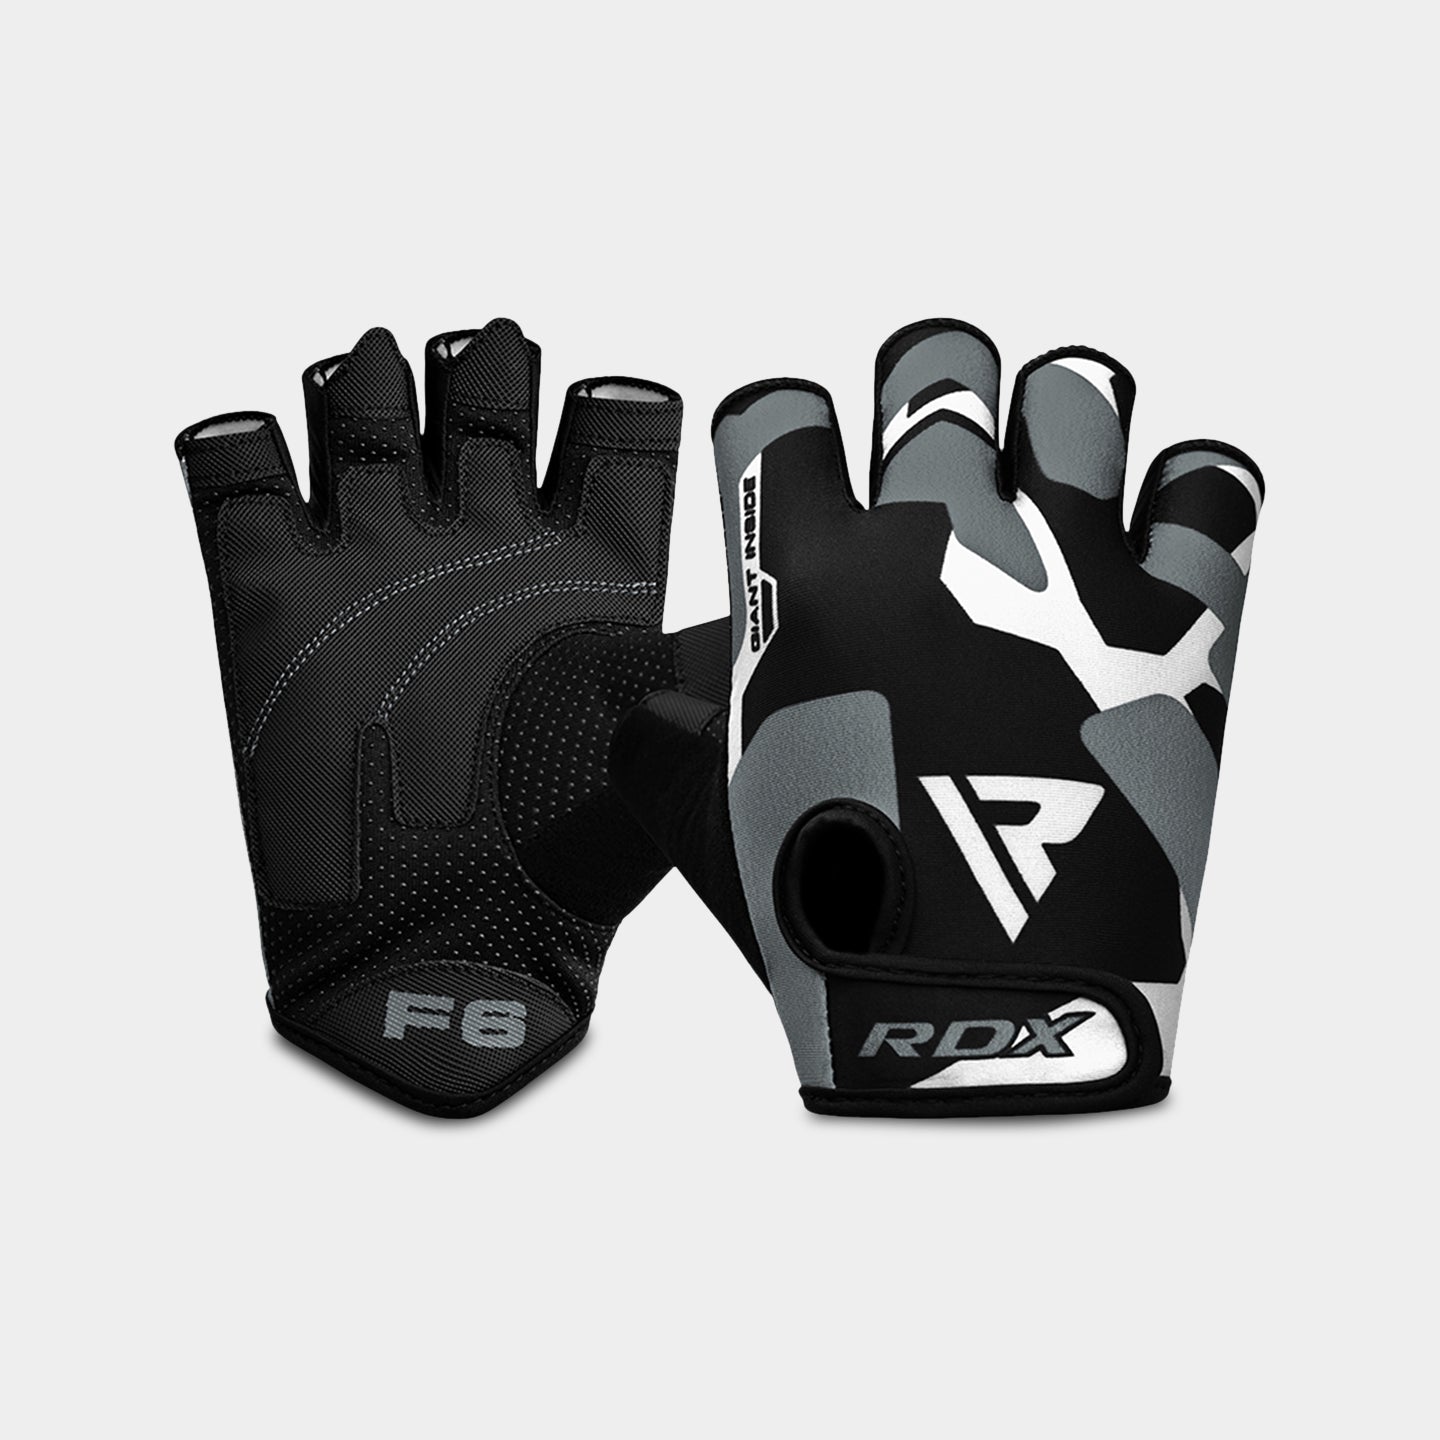 RDX Sports F6 Fitness Gym Gloves A1